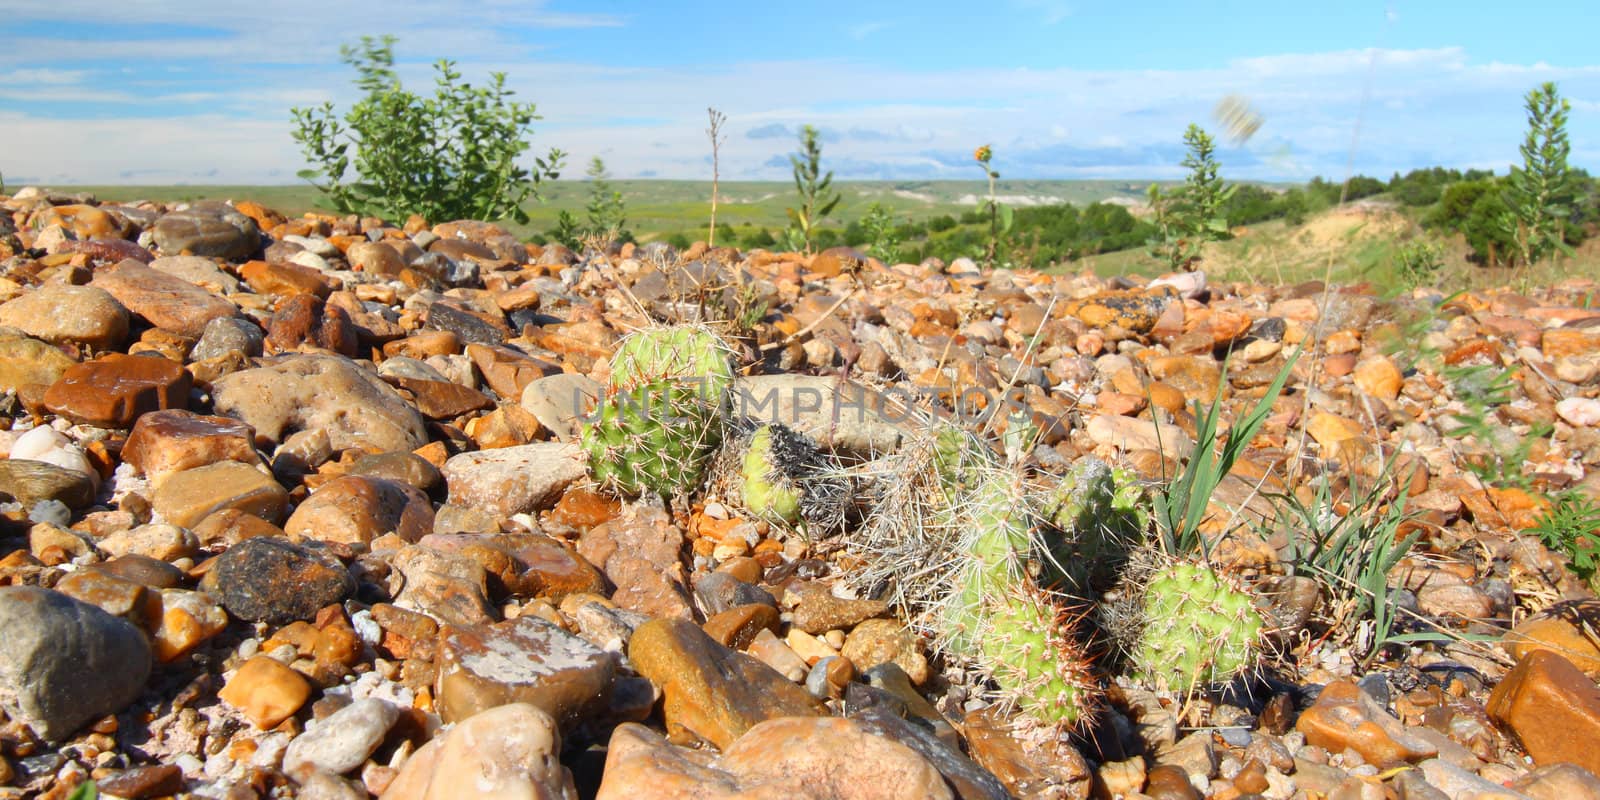 Badlands National Park Cacti by Wirepec